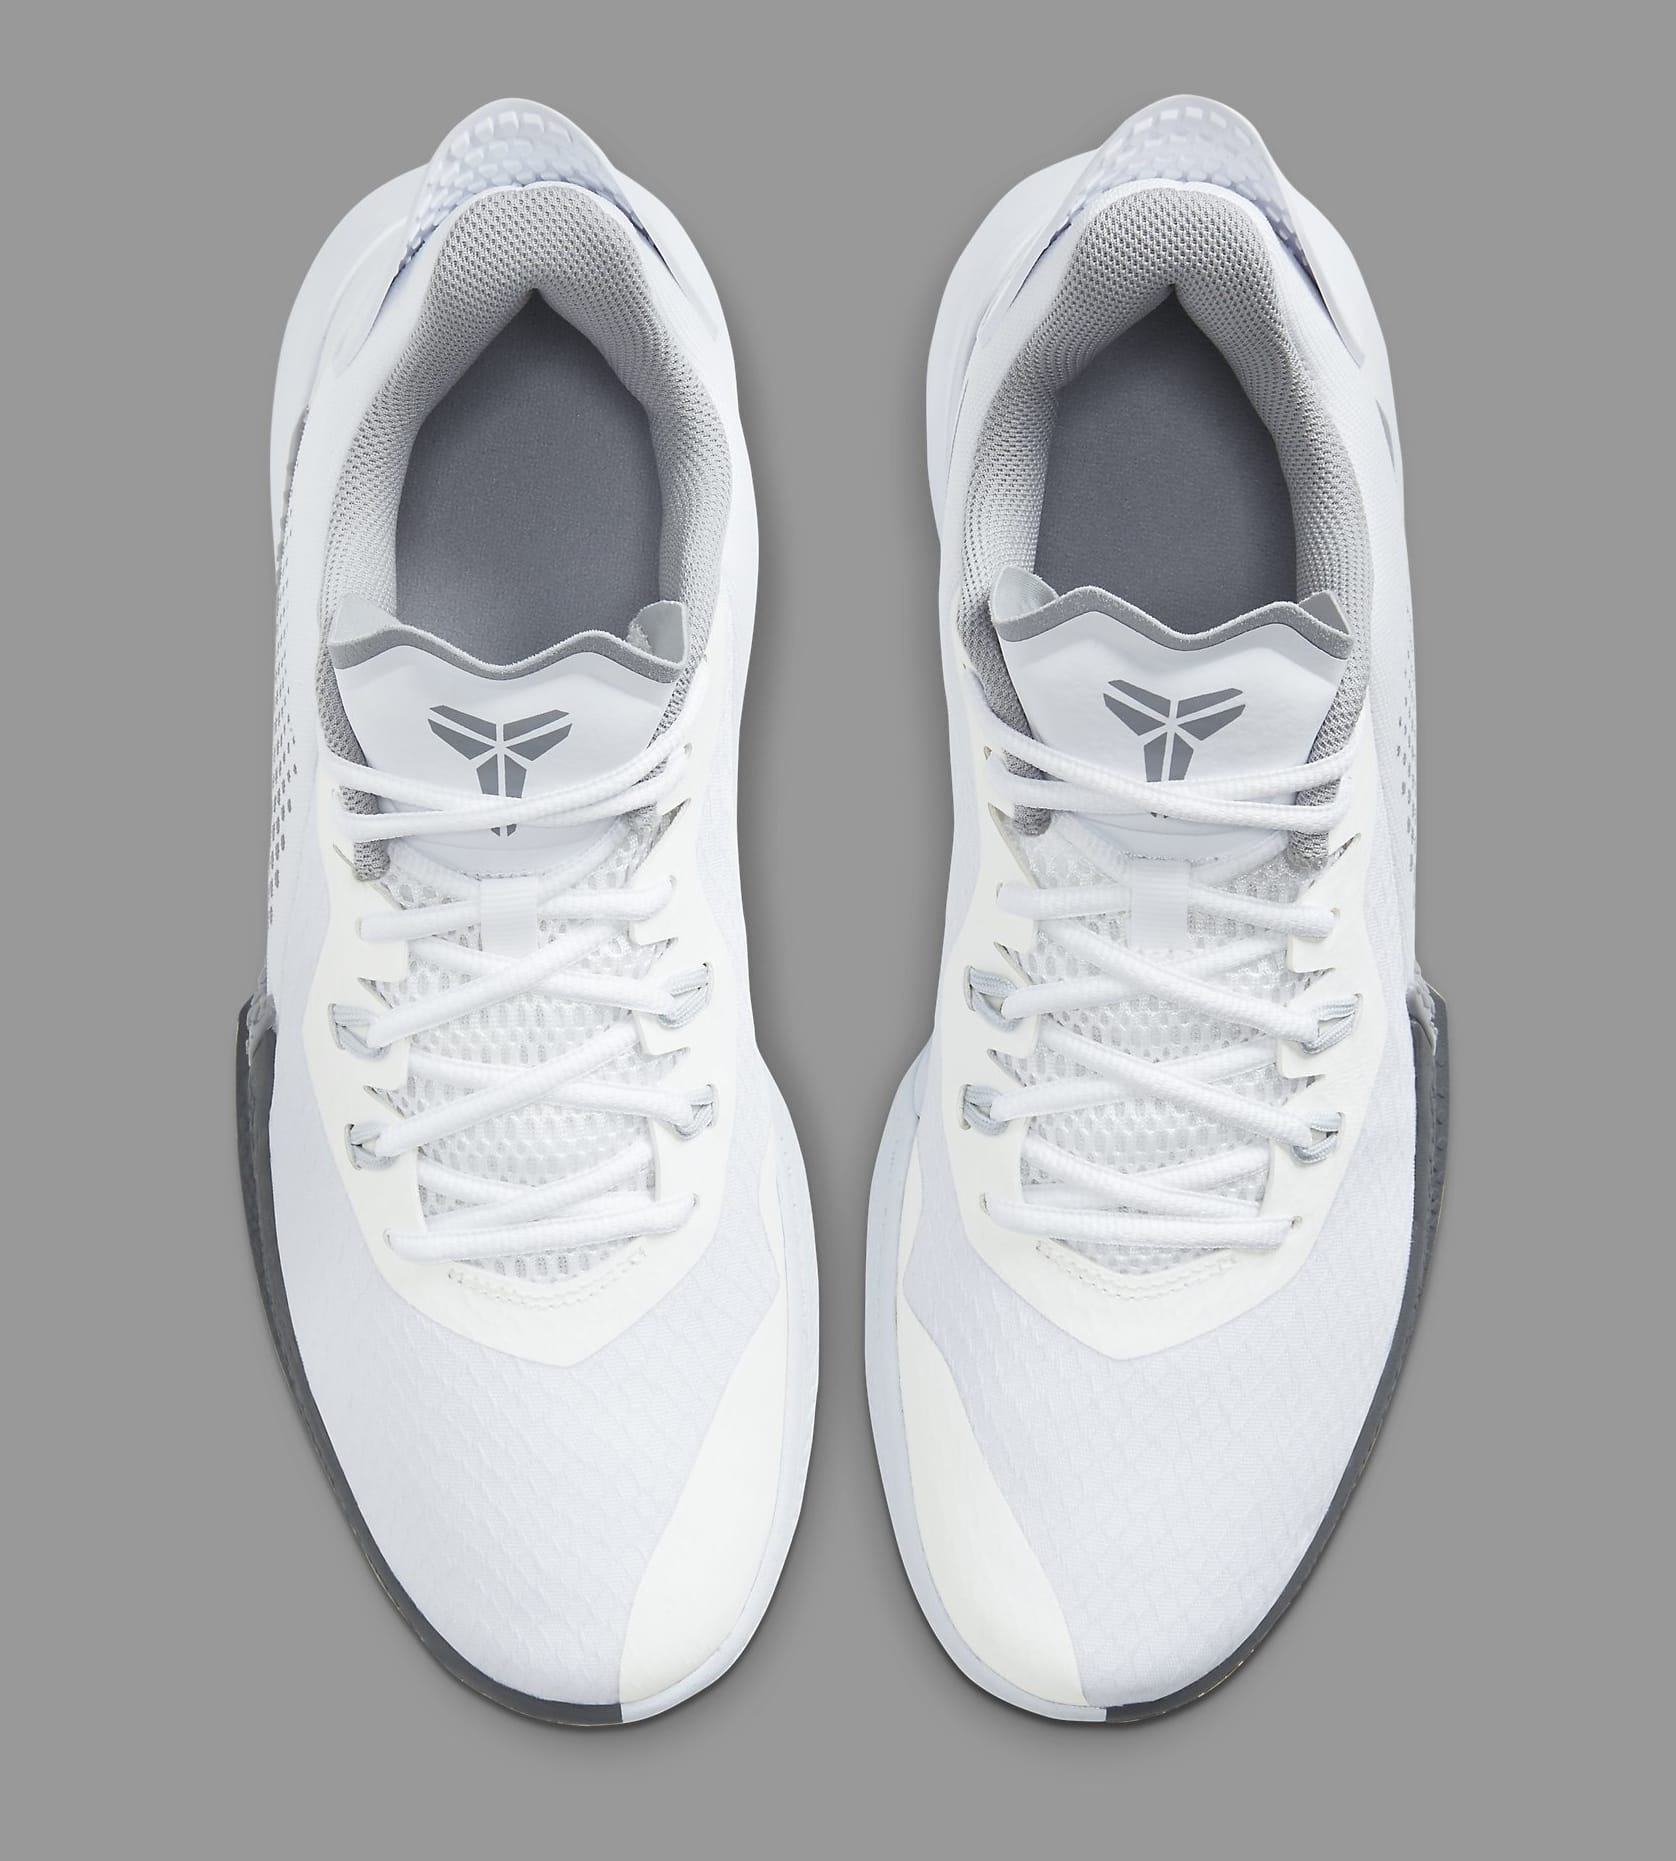 The Mamba Fury Could Be Nike's Next Kobe Sneaker